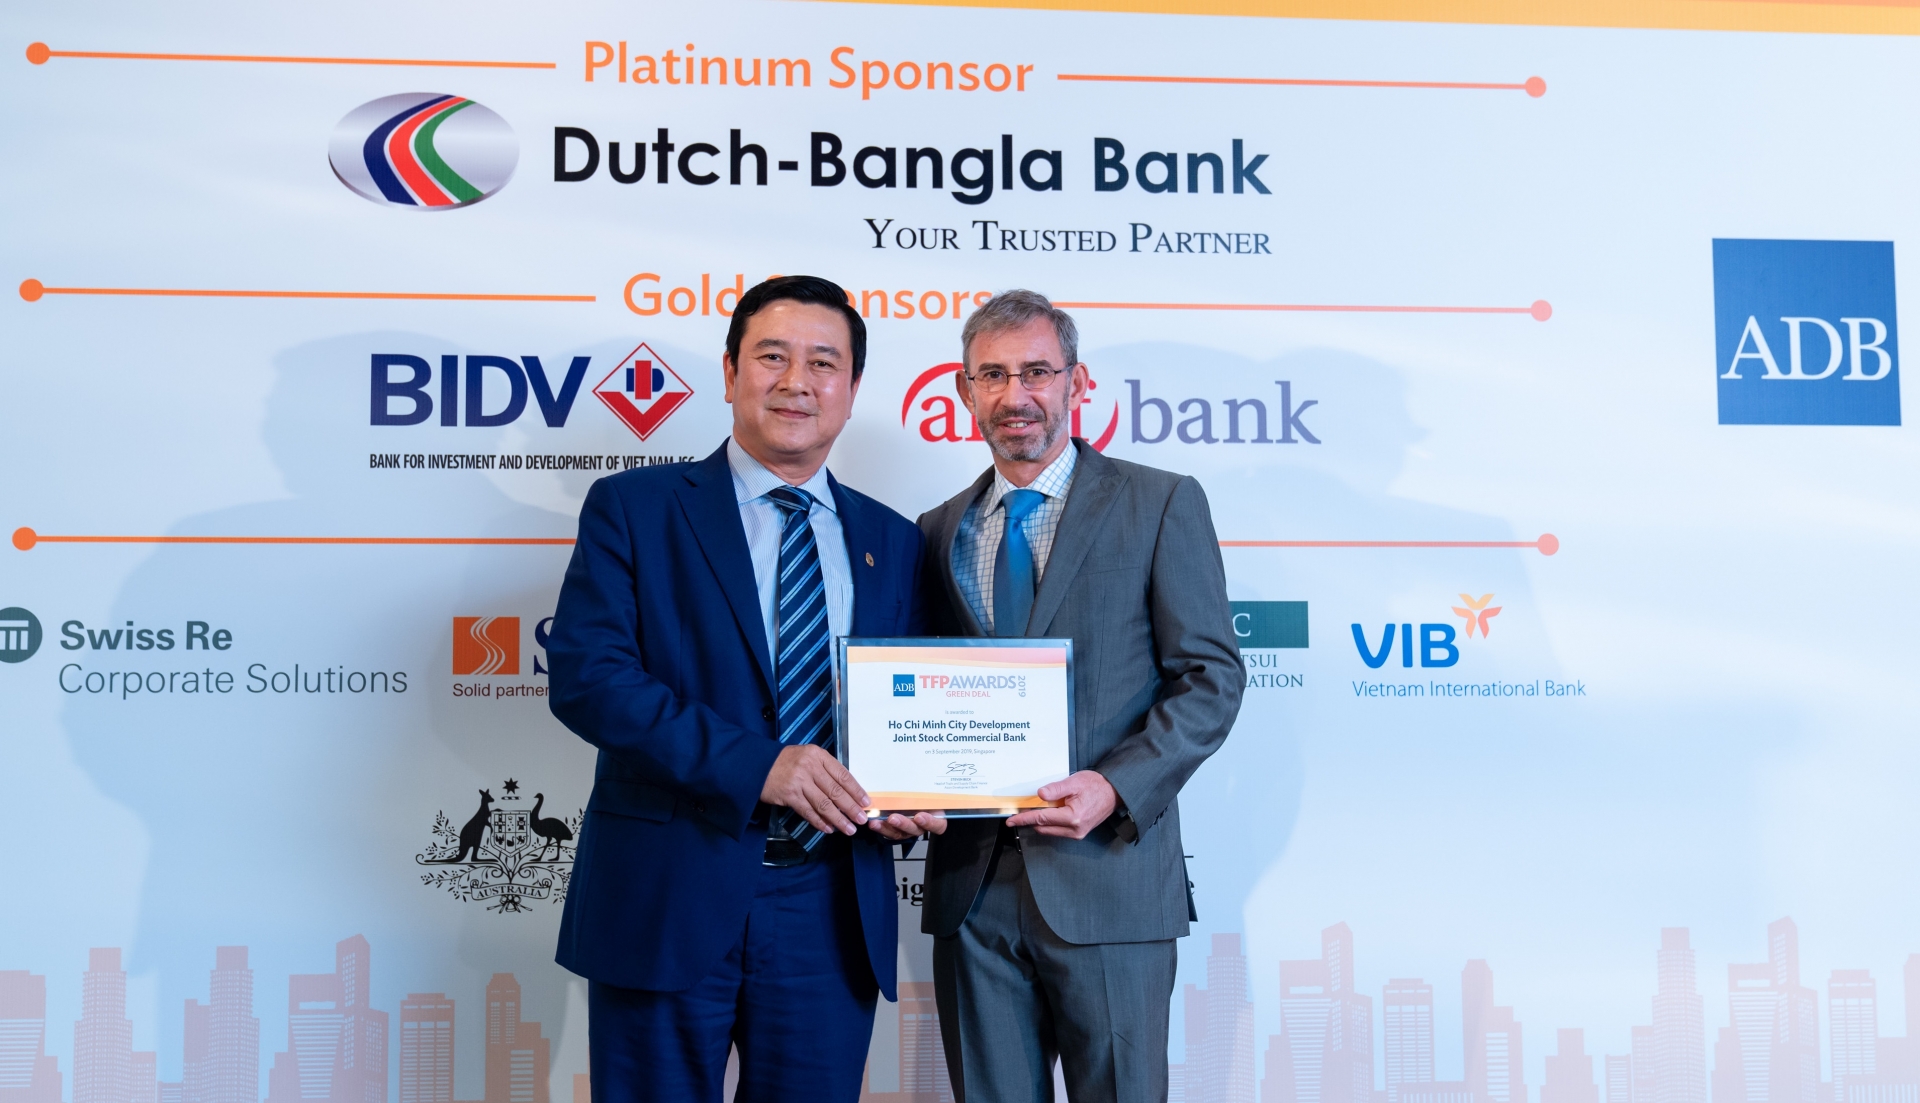 hdbank first vietnamese bank to receive green deal award from adb